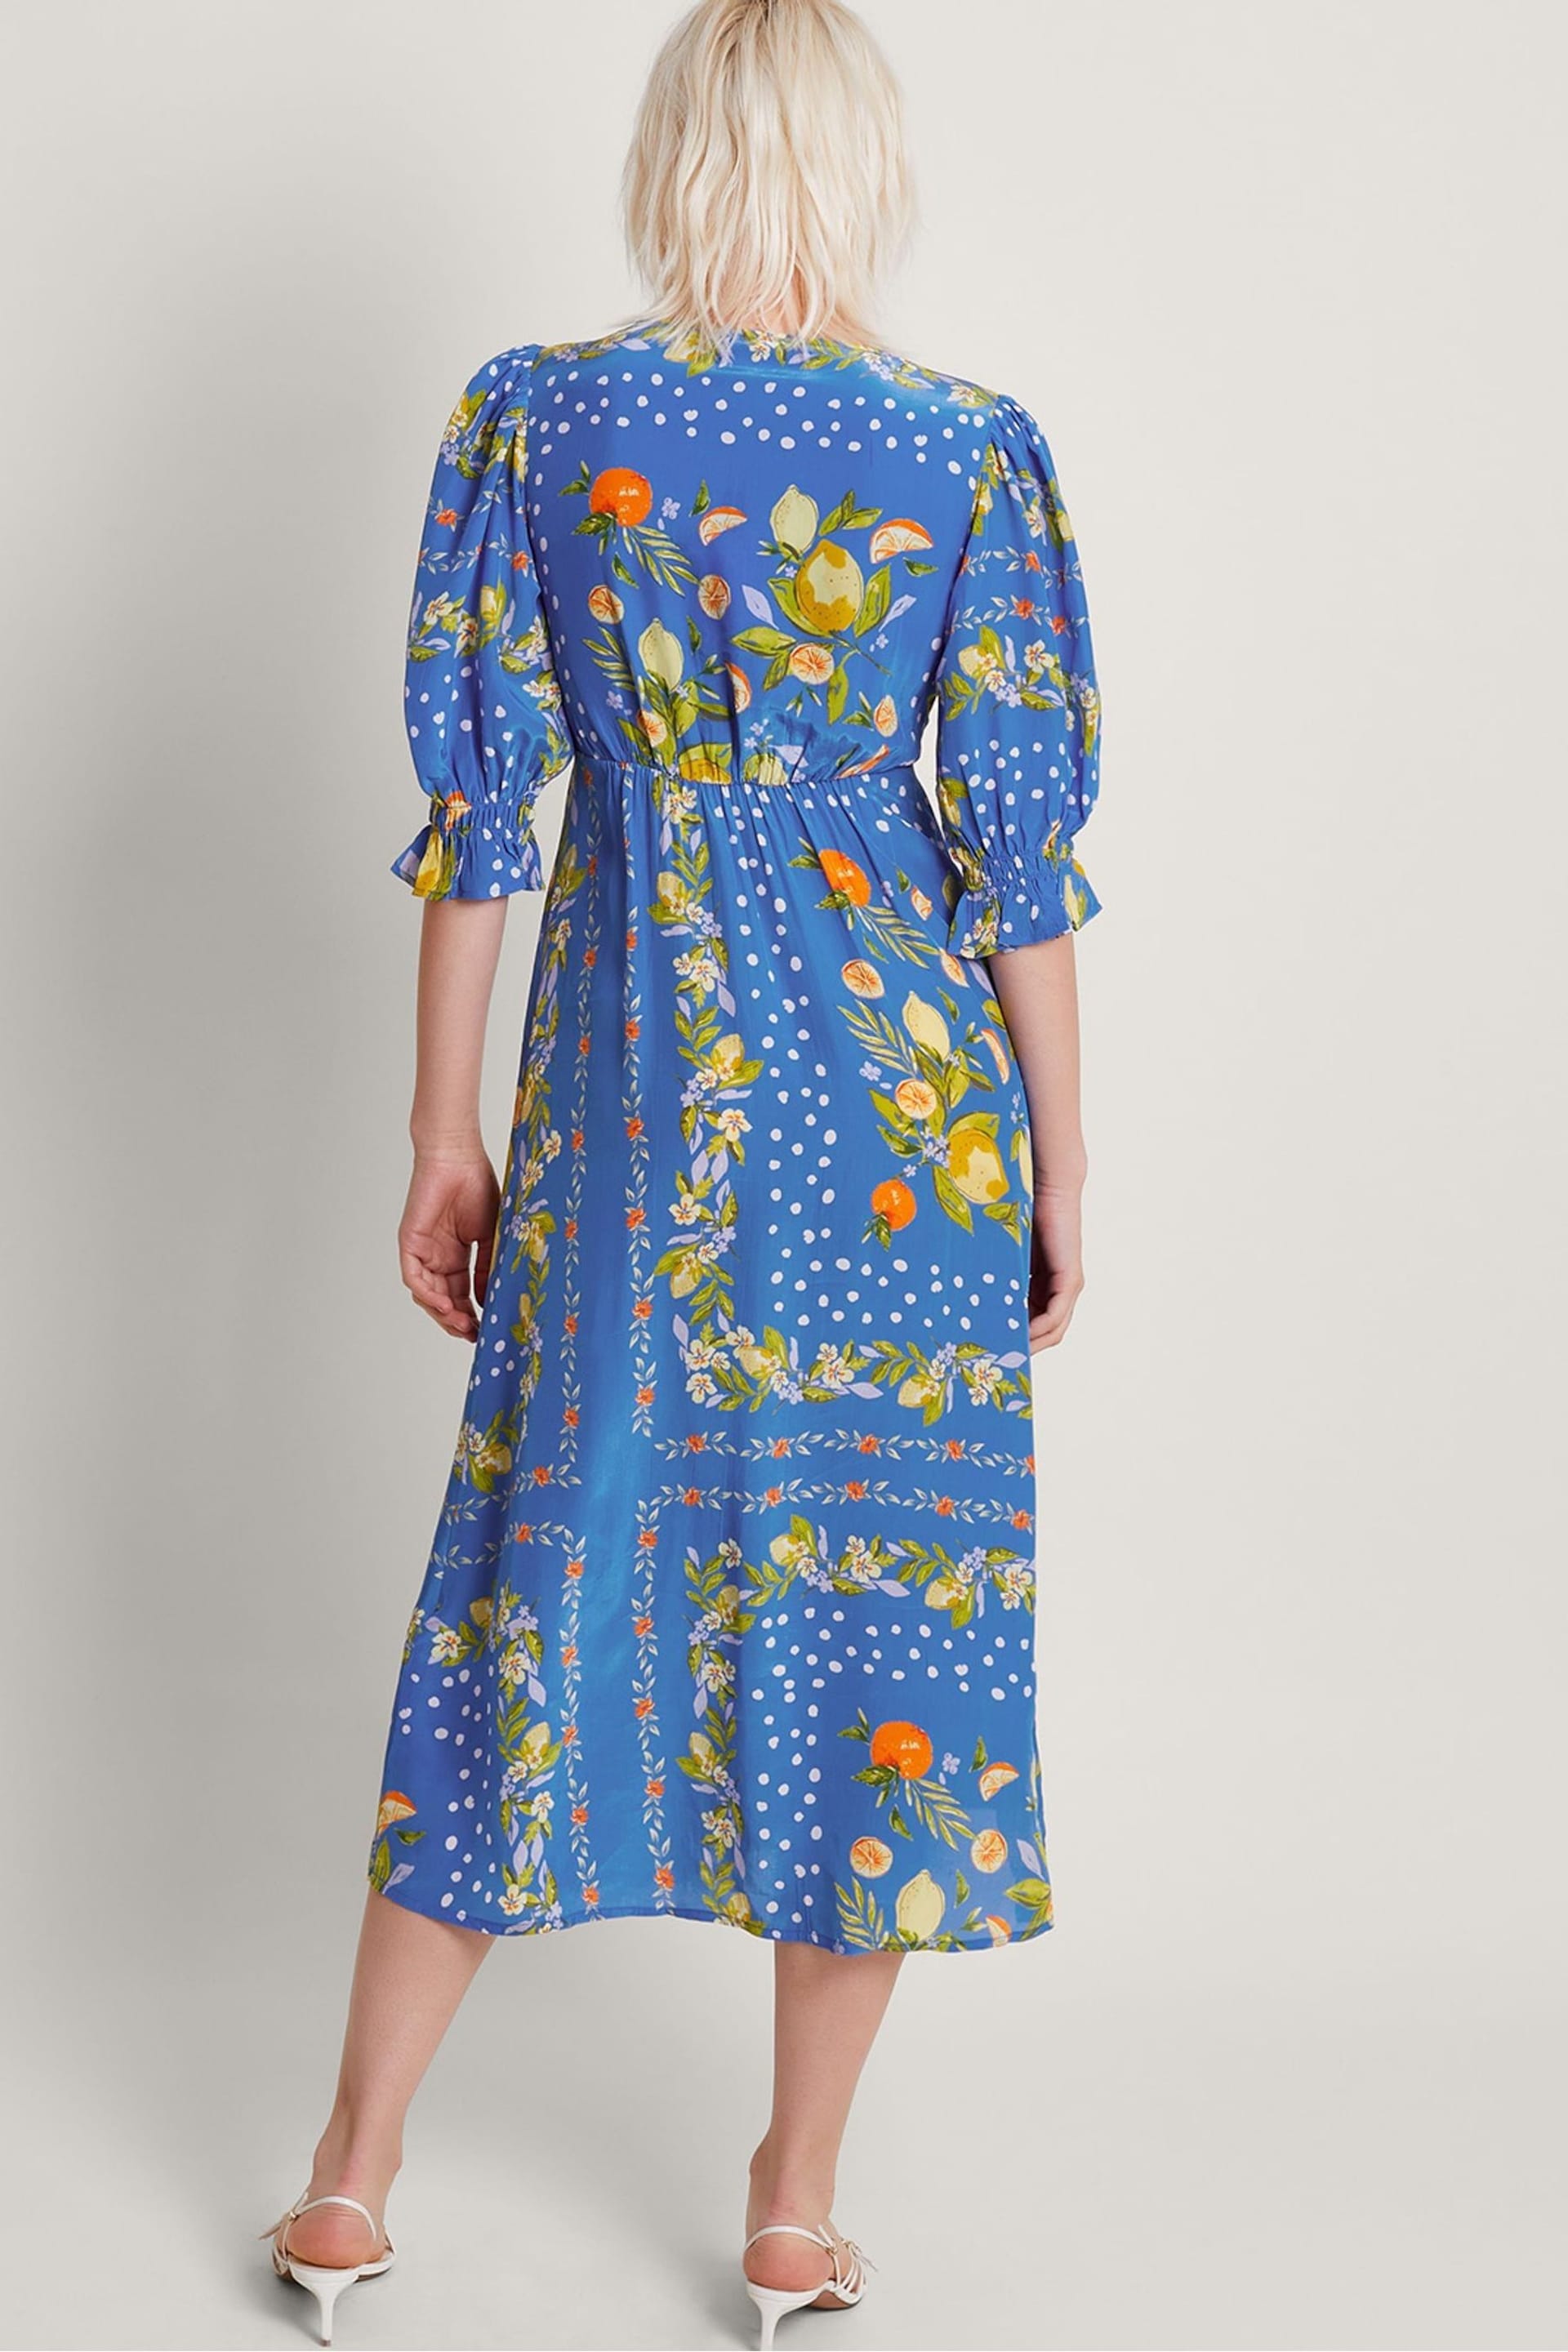 Monsoon Blue Paloma Tea Dress - Image 2 of 5